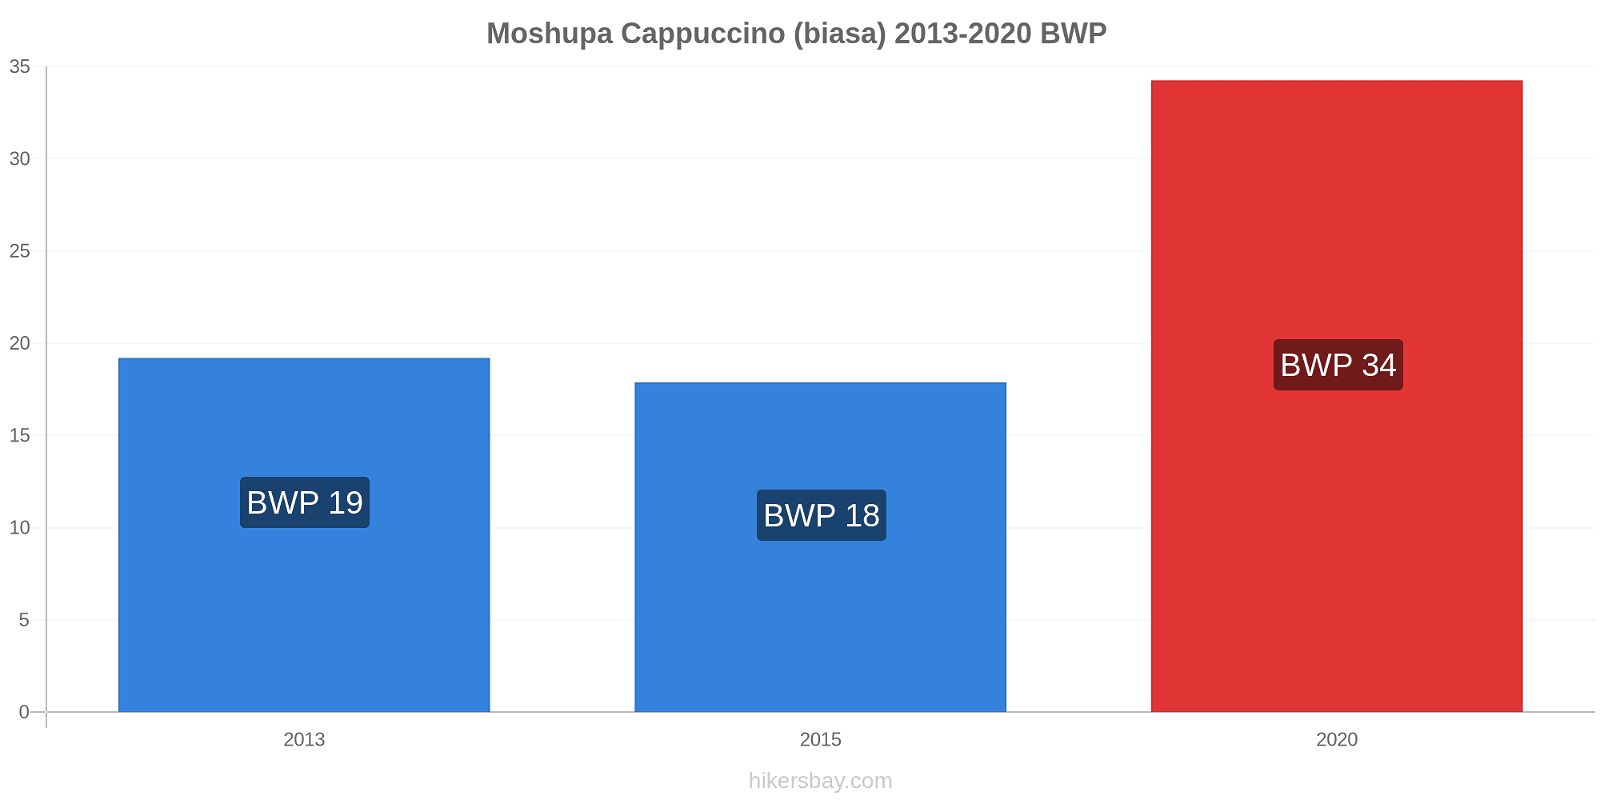 Moshupa perubahan harga Cappuccino (biasa) hikersbay.com